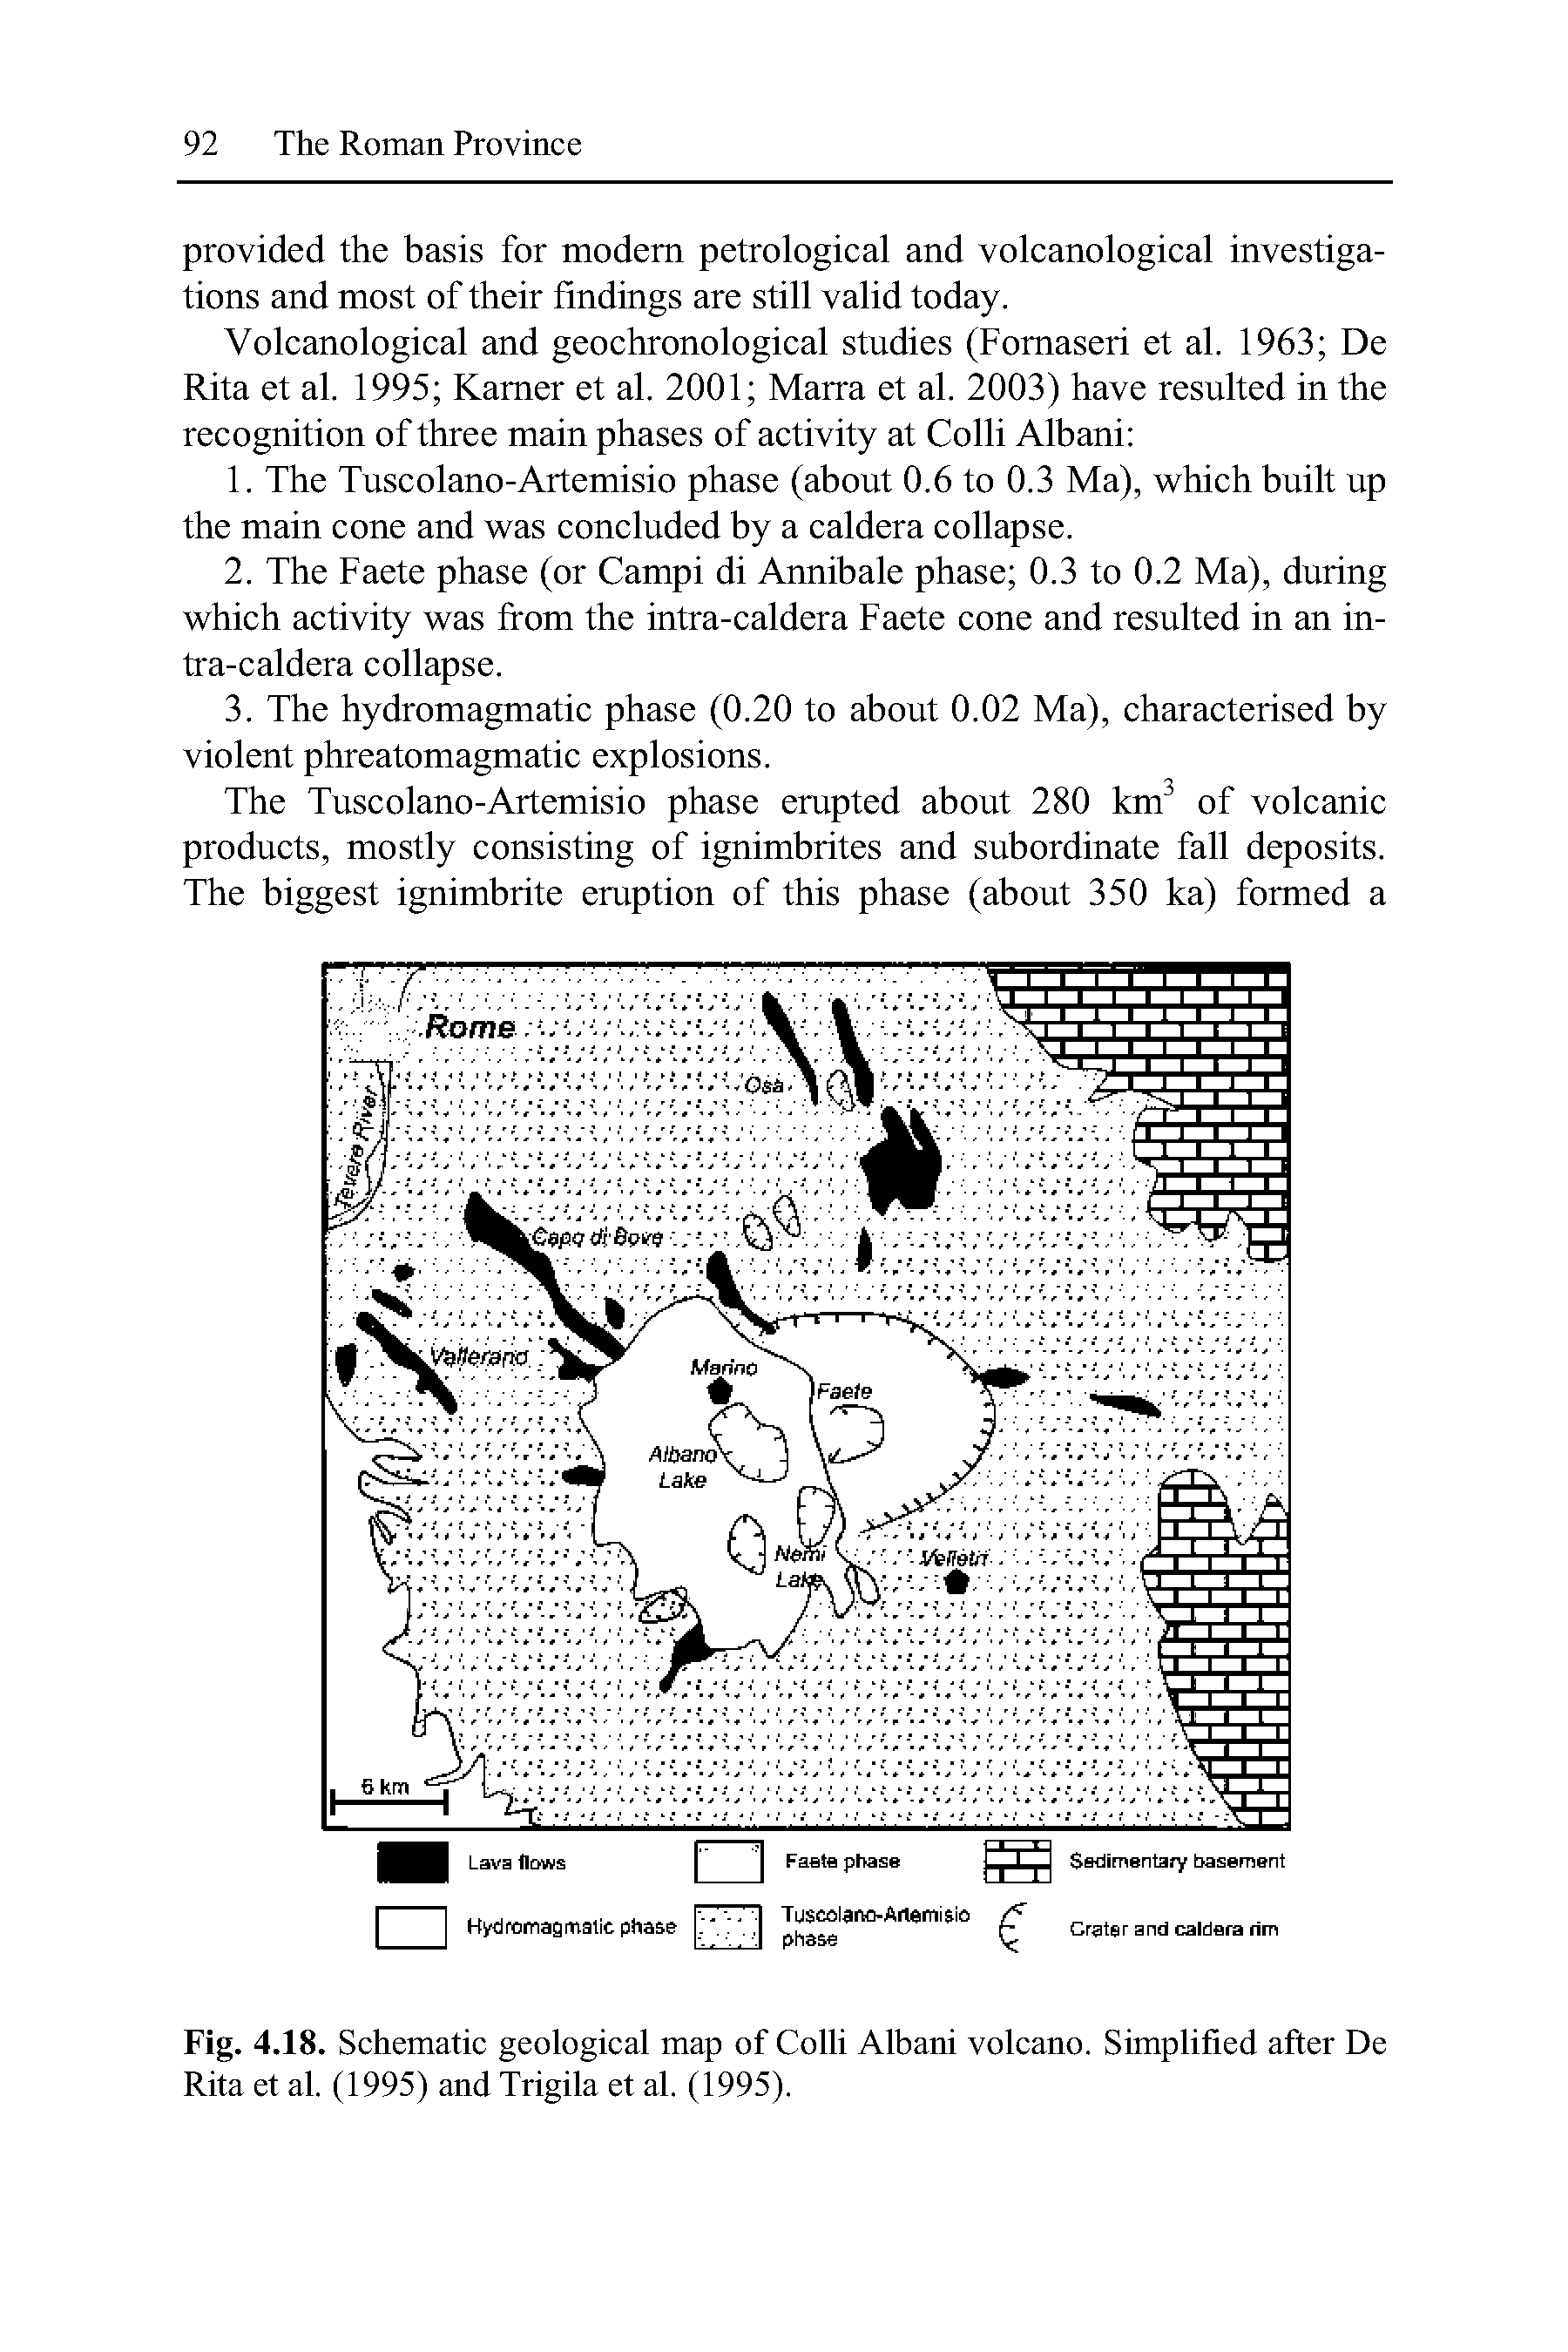 Fig. 4.18. Schematic geological map of Colli Albani volcano. Simplified after De Rita et al. (1995) and Trigila et al. (1995).